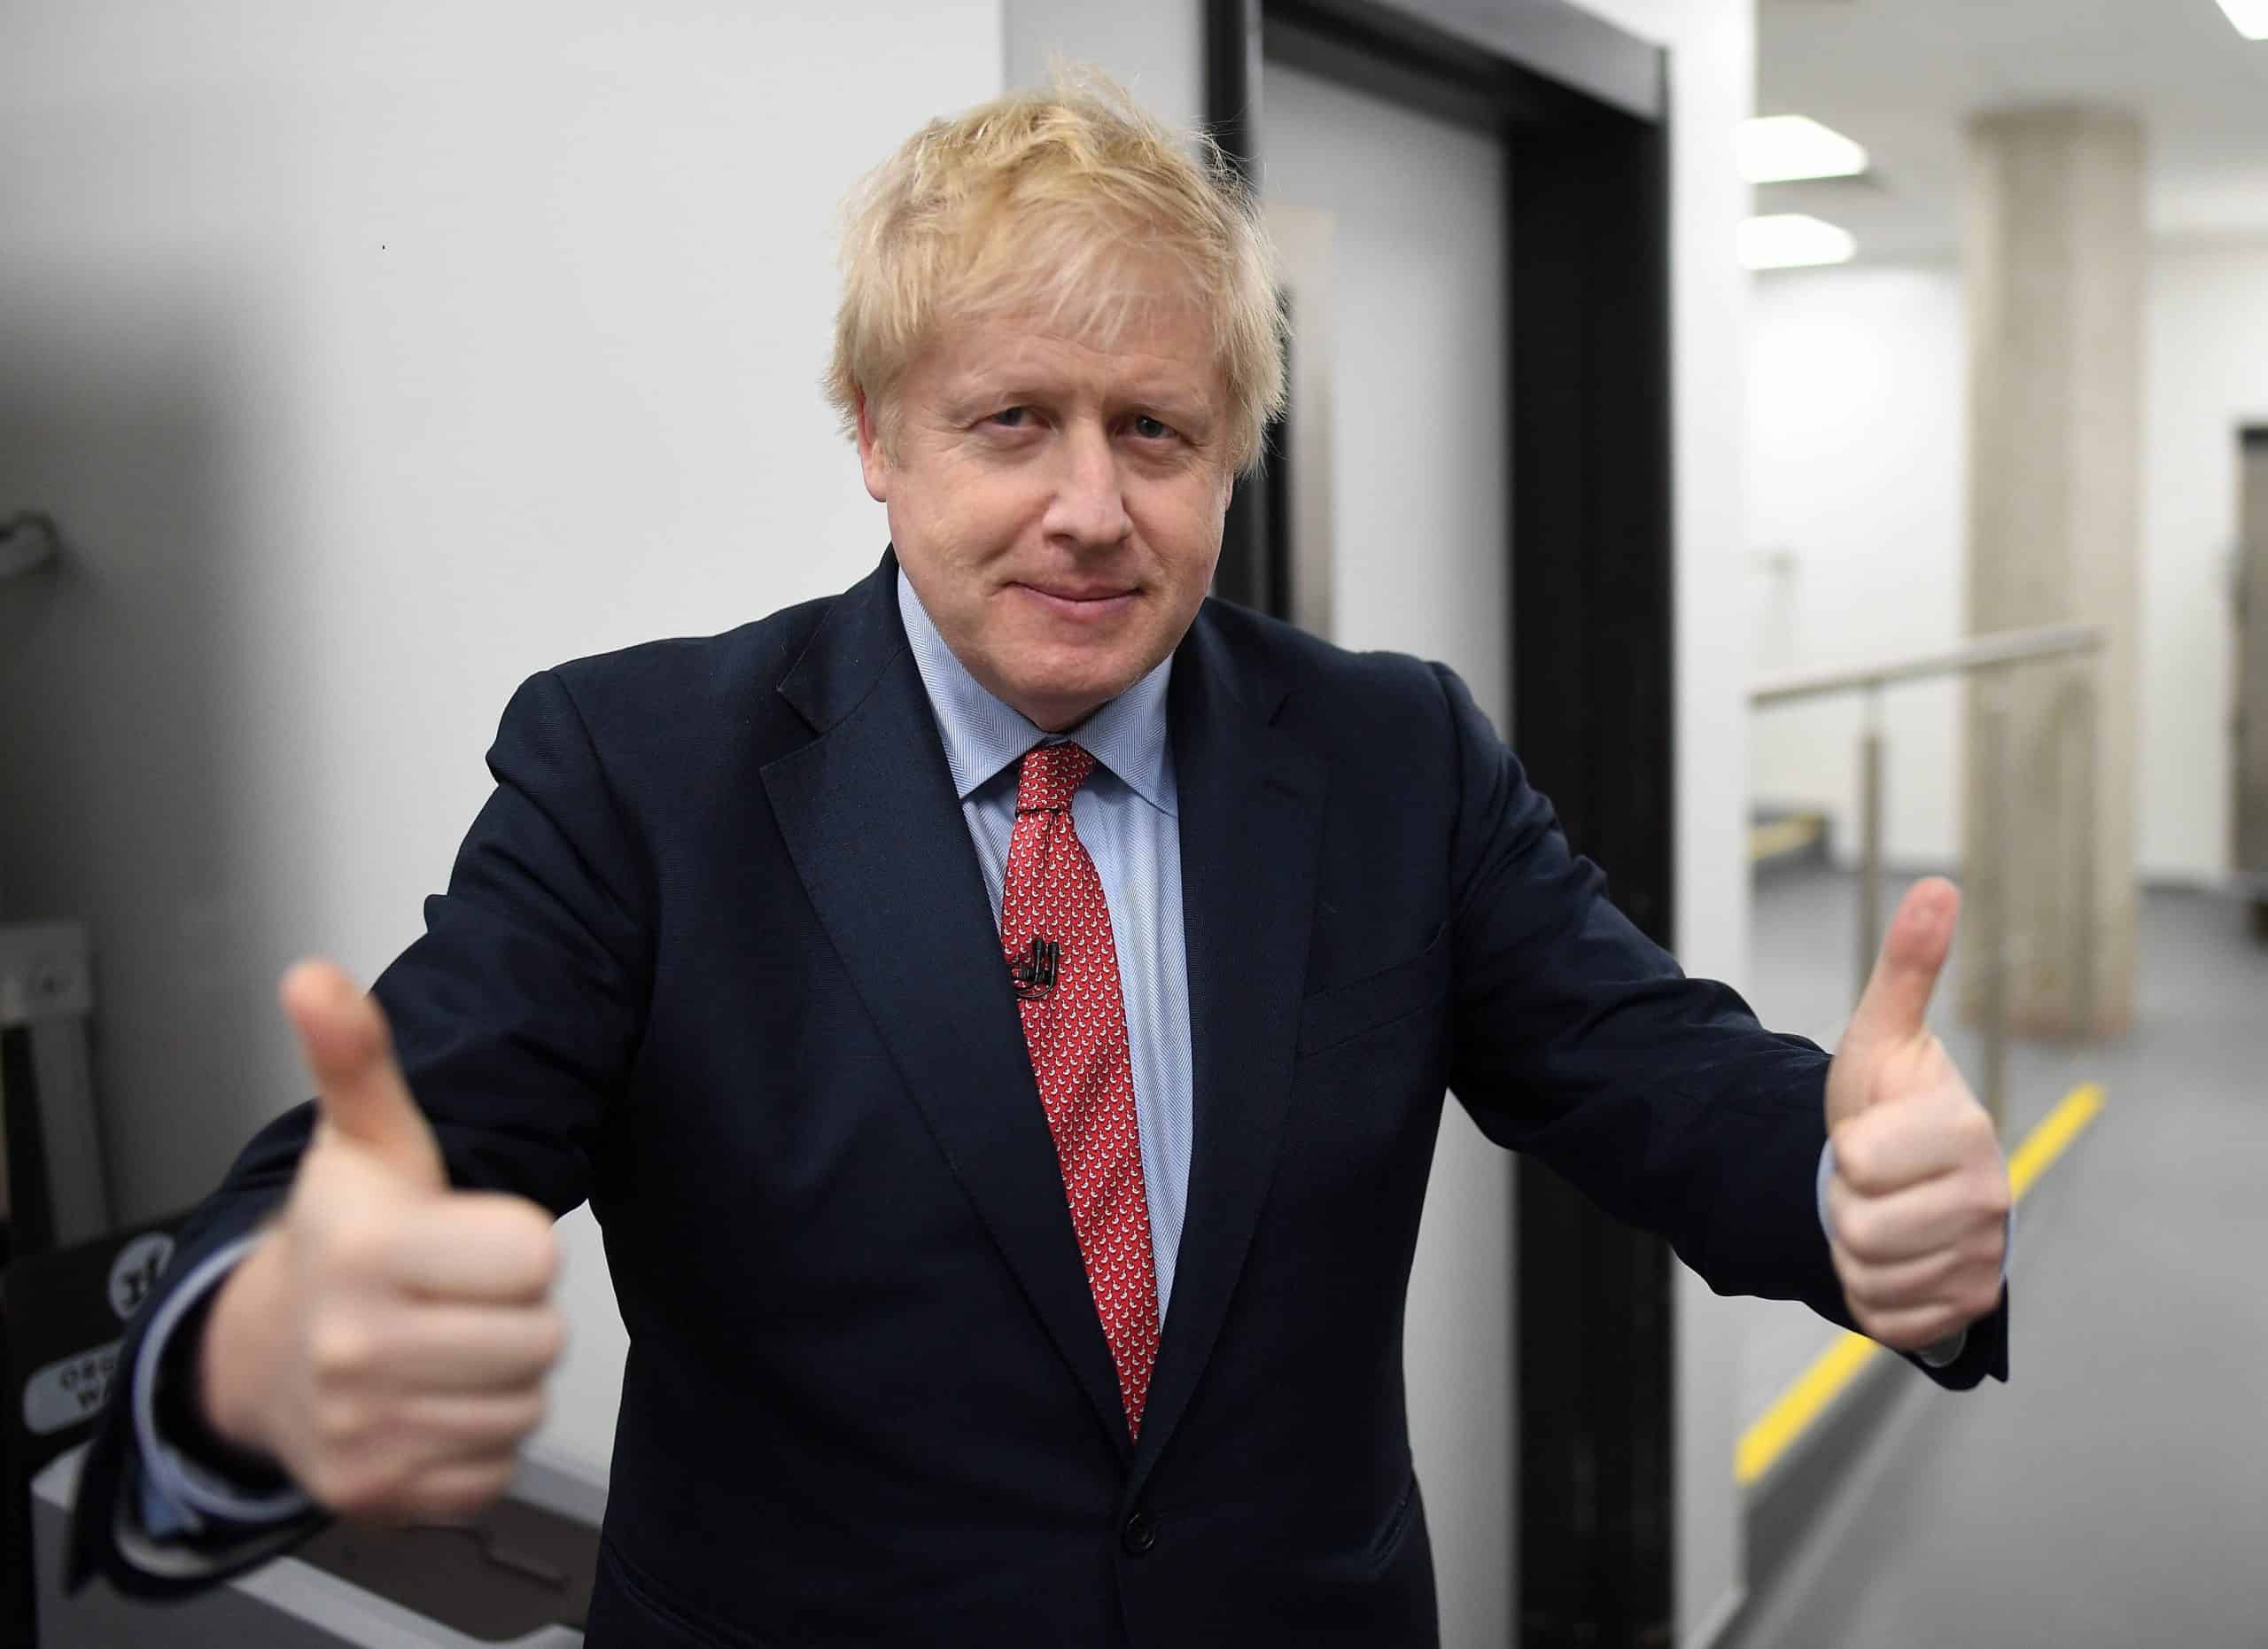 Boris Johnson: UK has “a quite phenomenal year” ahead of it